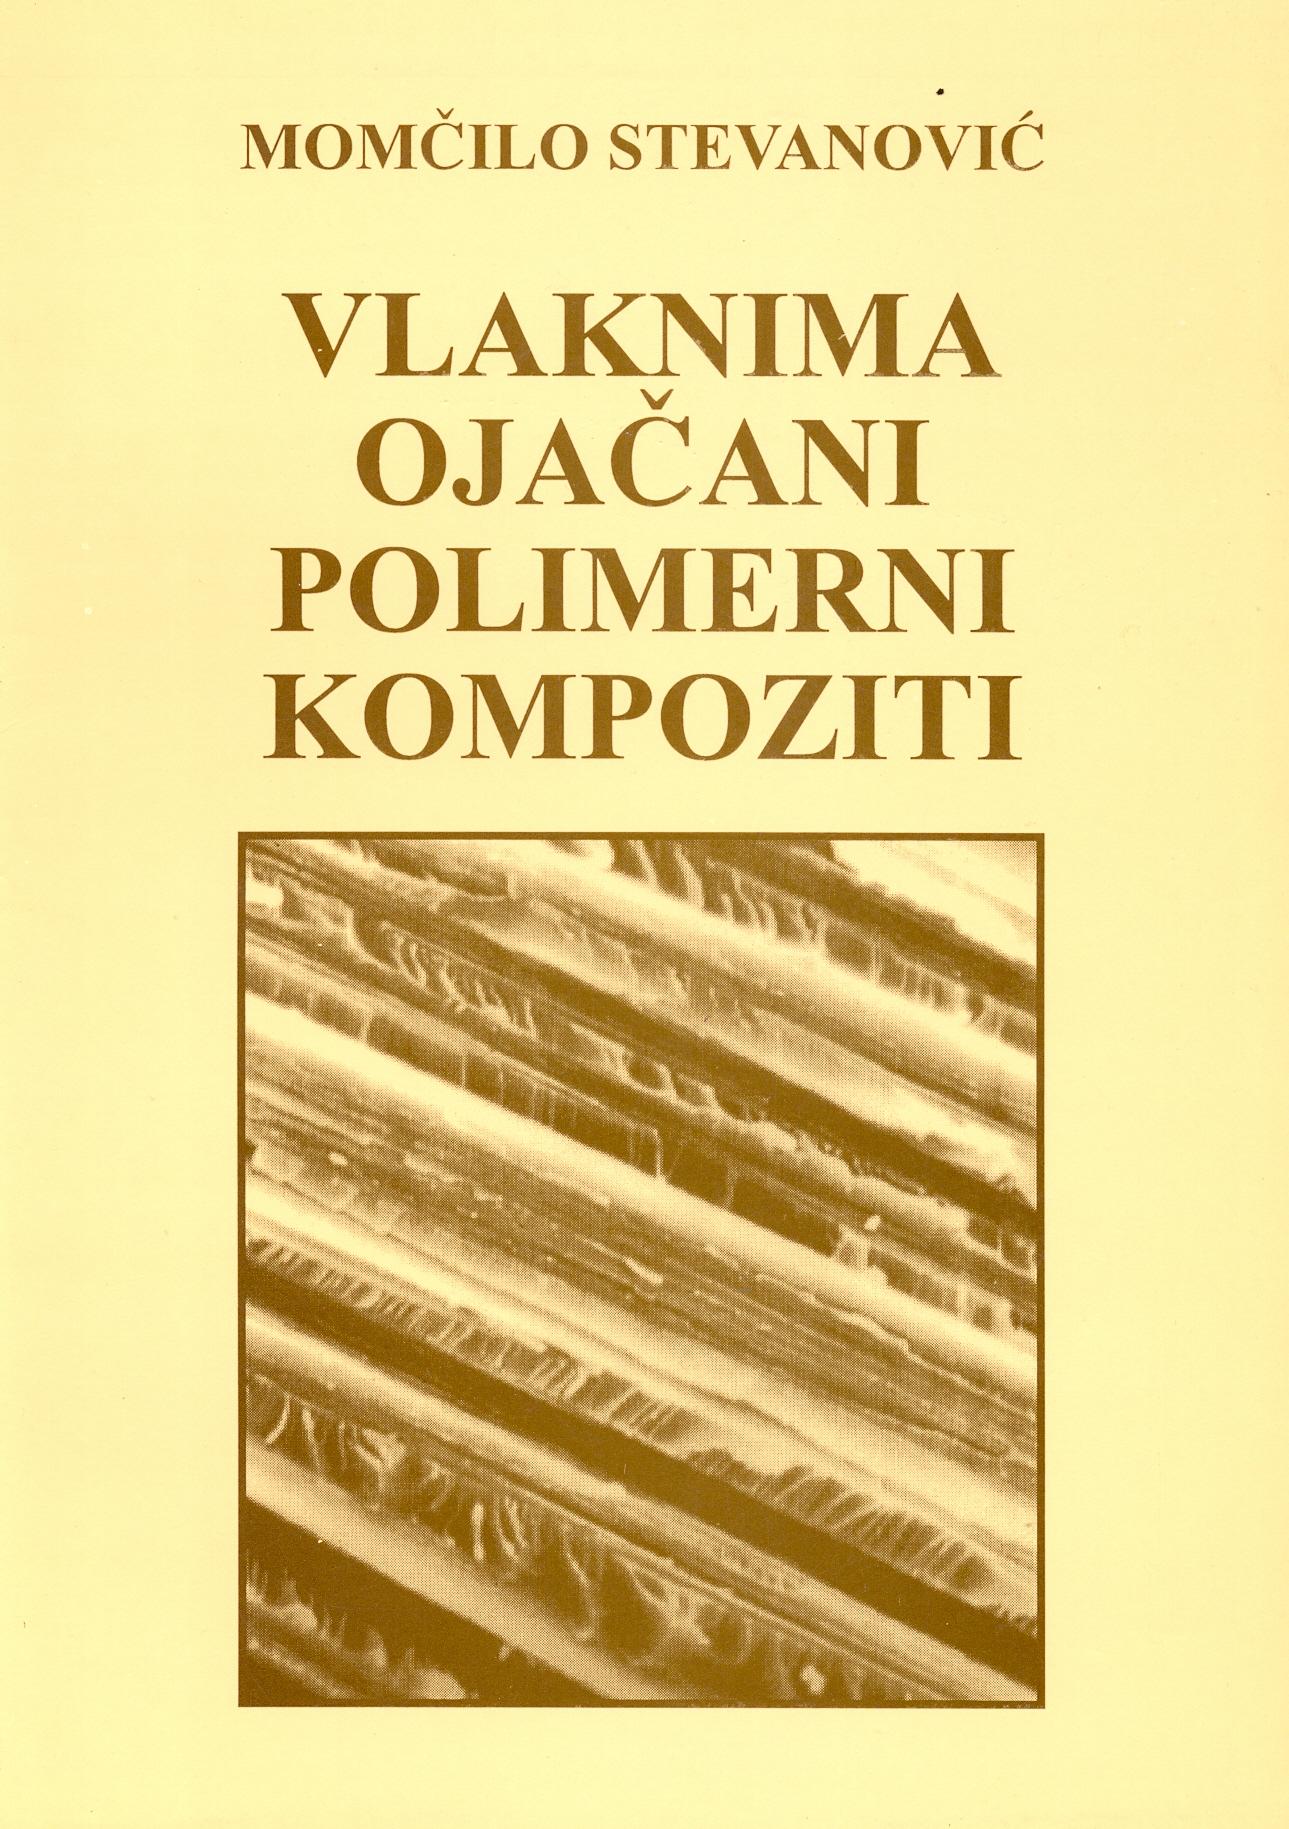 Selected image for Vlaknima ojačani polimerni kompoziti - Momčilo Stevanović